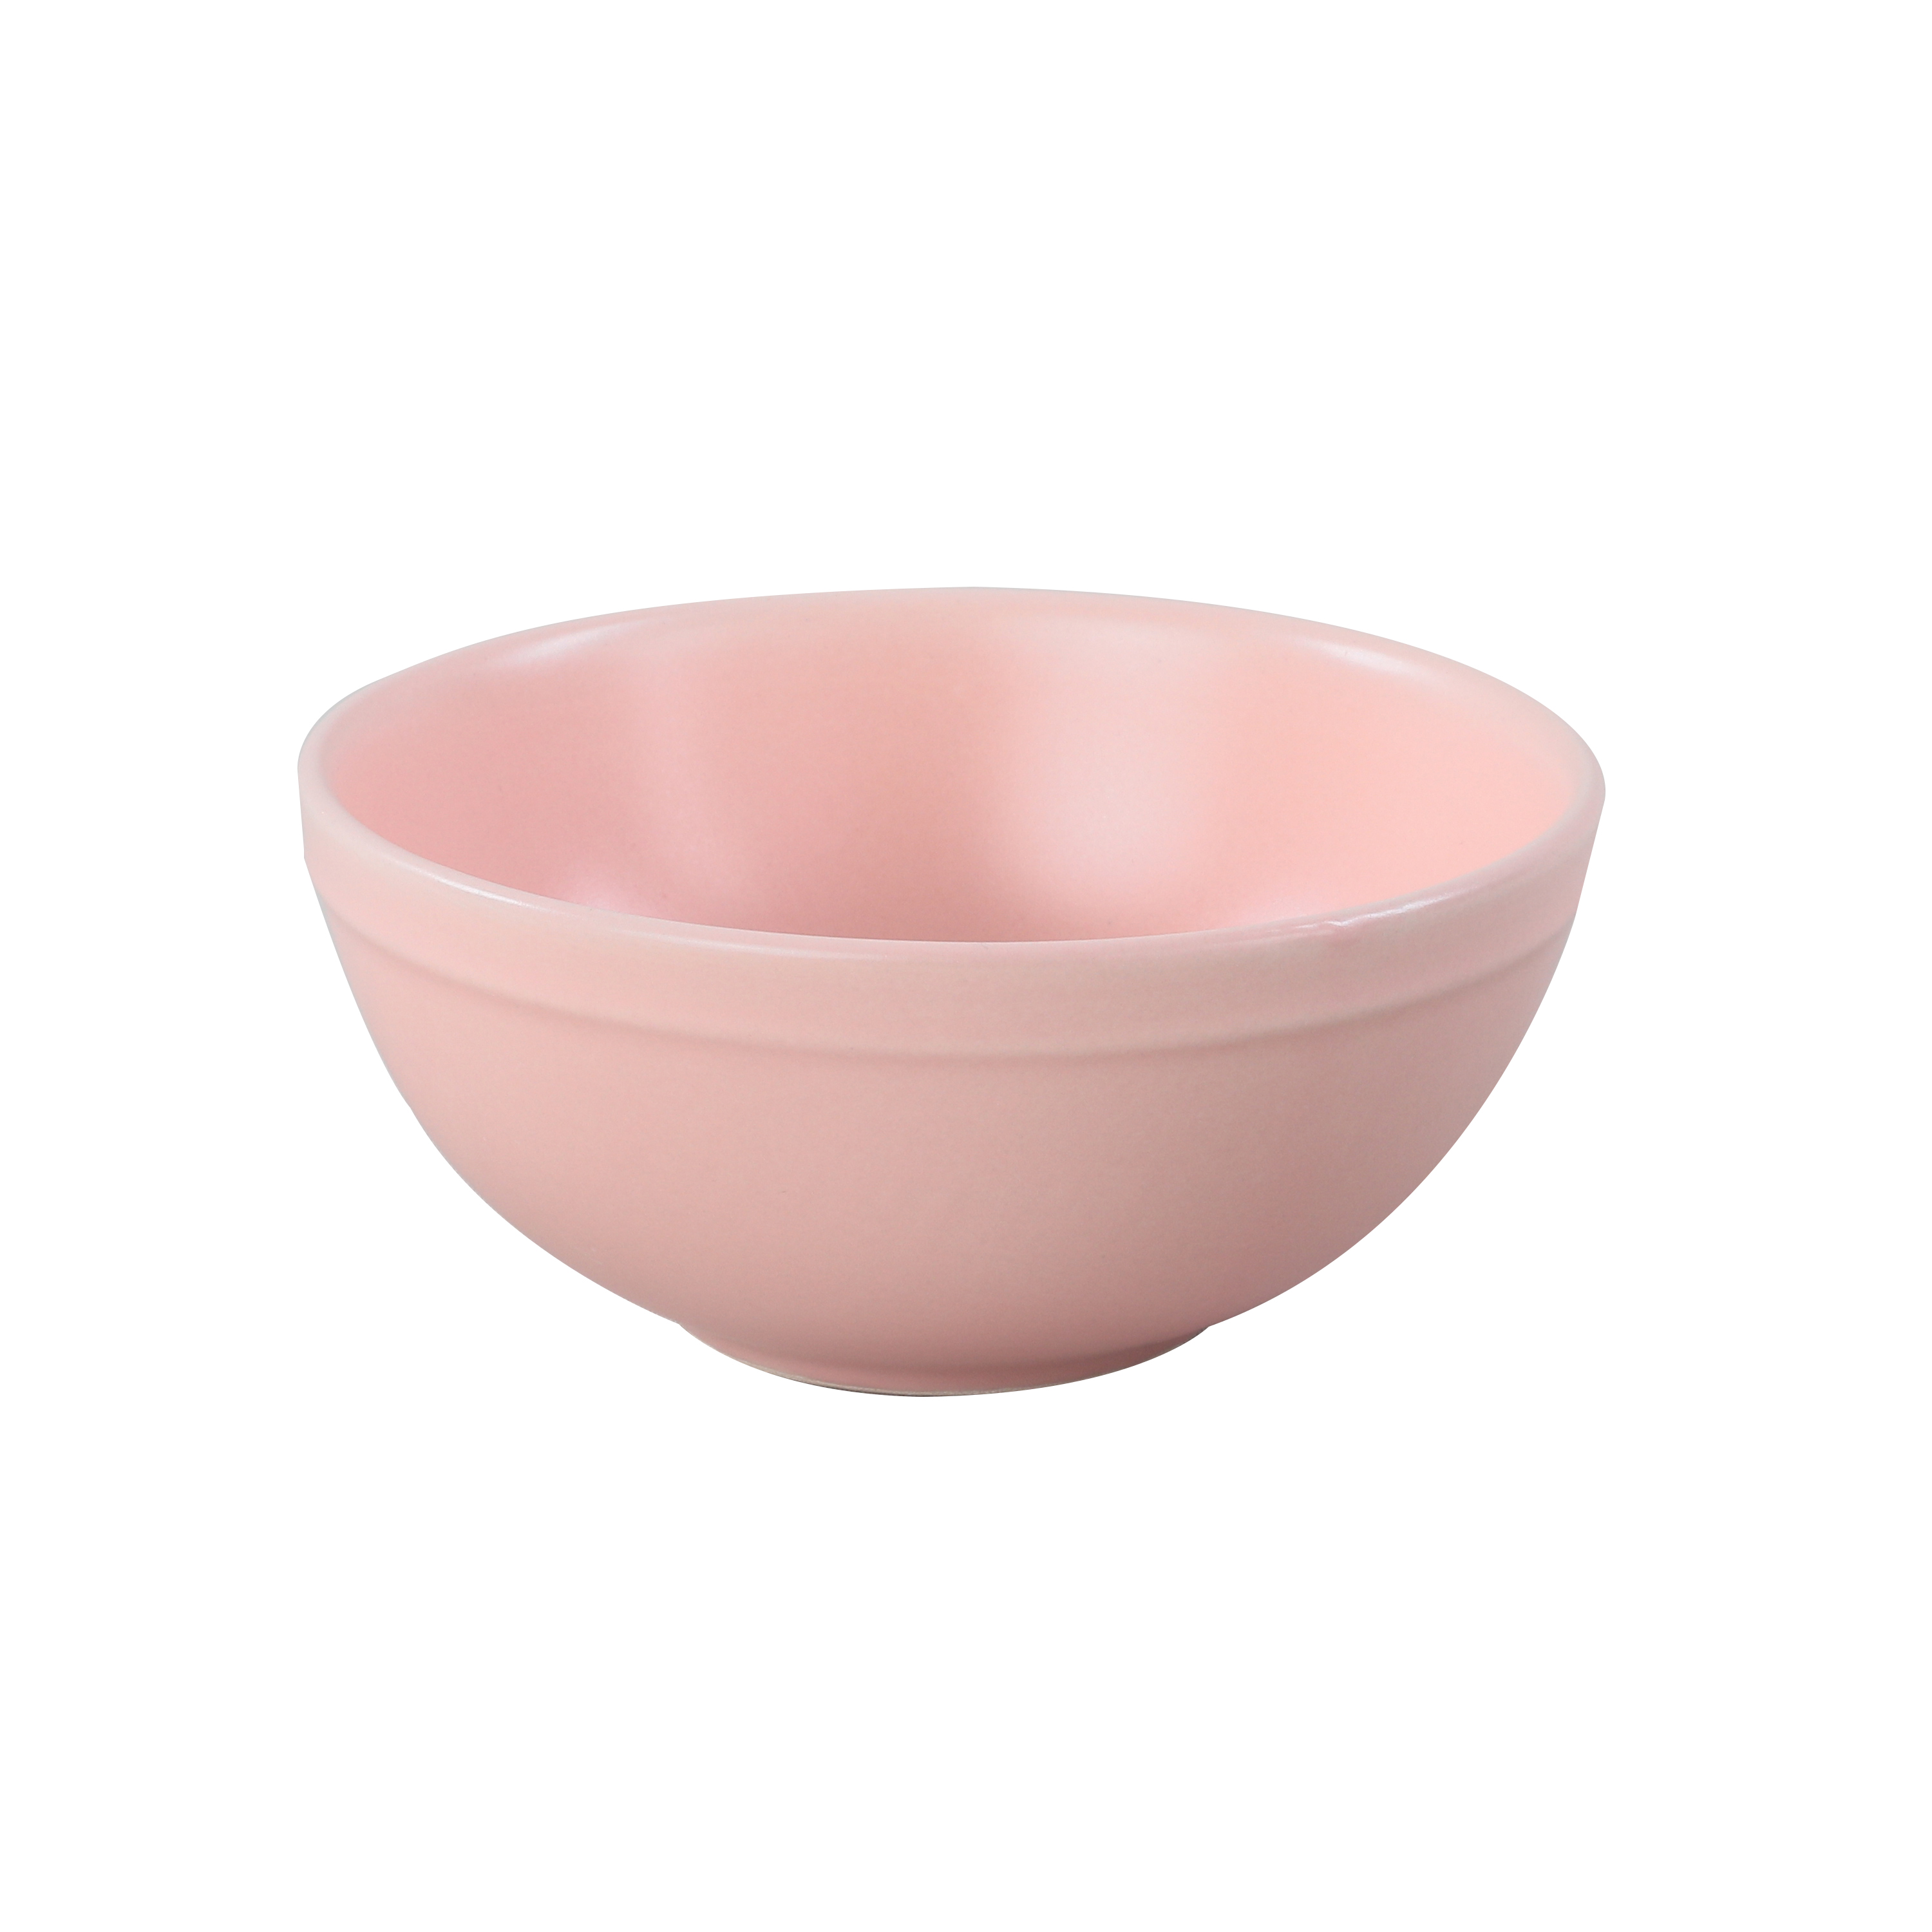 Bowl Semarang em ceramica D14xA6cm cor rosa